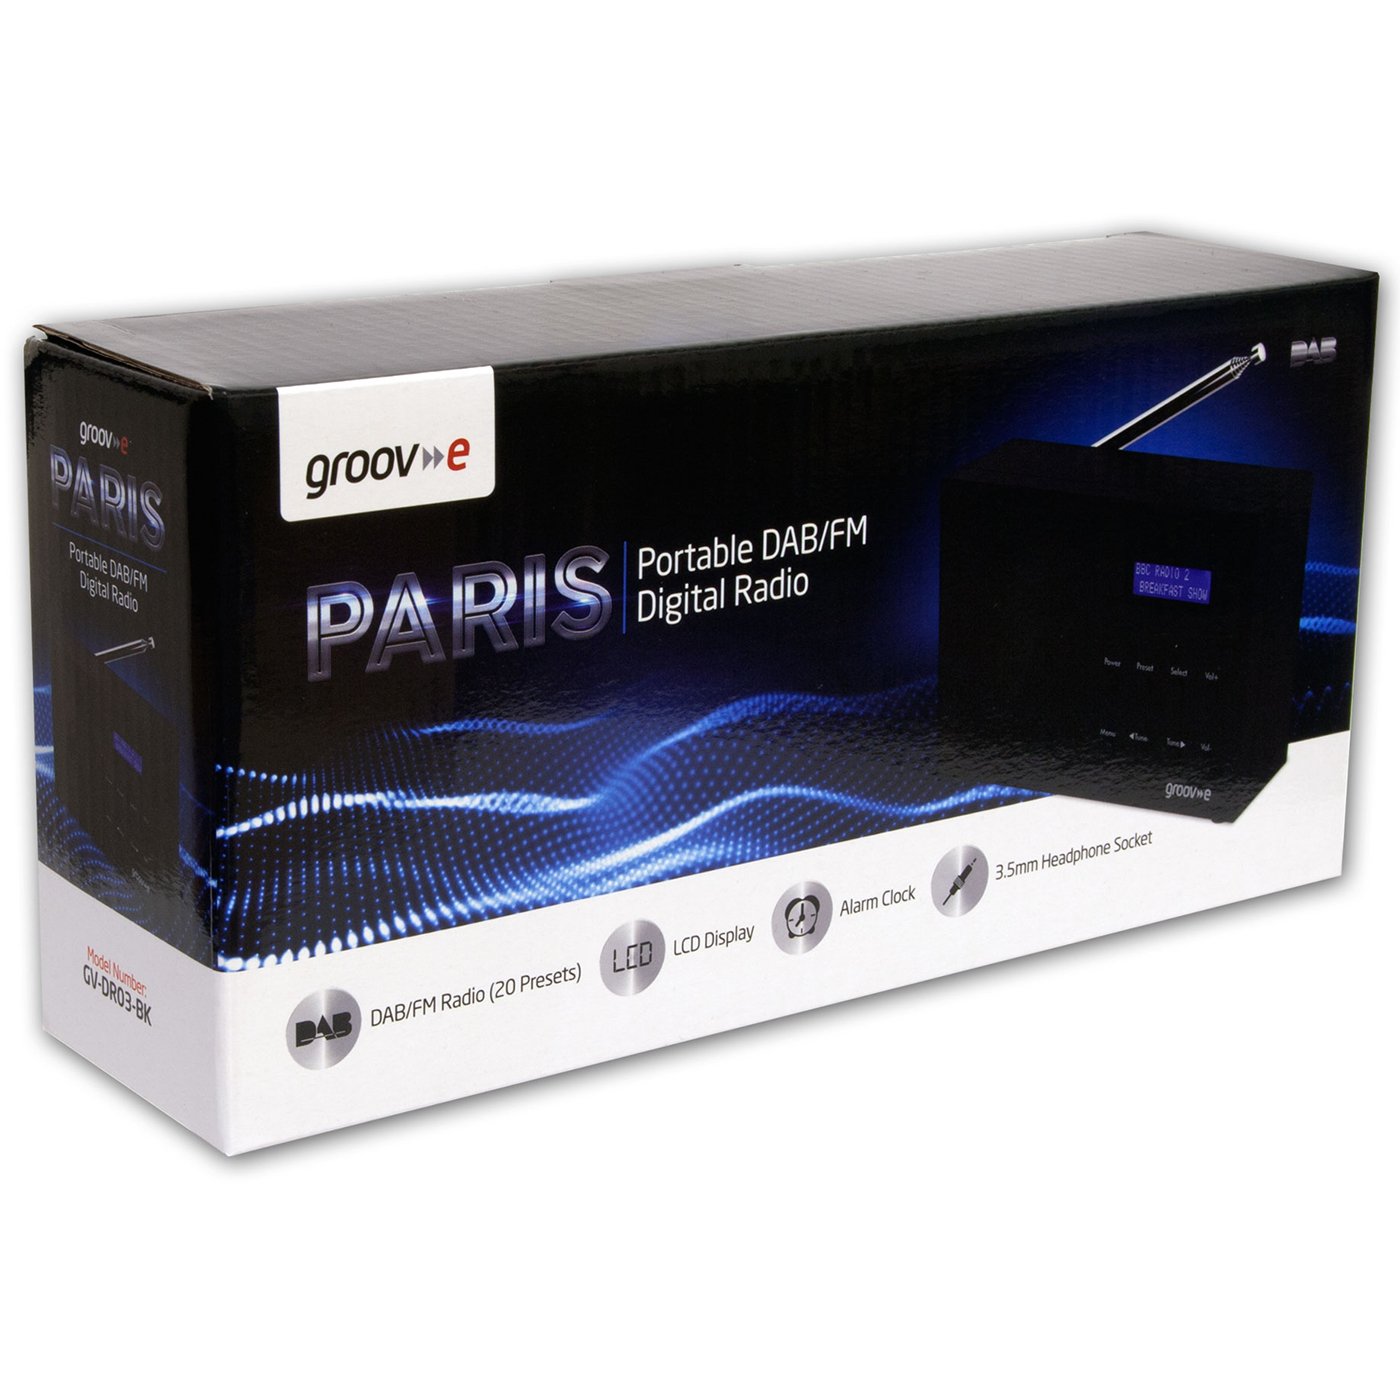 Groov-e GVDR03BK Paris Portable DAB/FB Digital Radio with 20 Preset Stations, LCD Display, Dual Alarm Clock & 3.5mm Headphone Input - Black, 9.0 cm*3.5 cm*19.0 cm